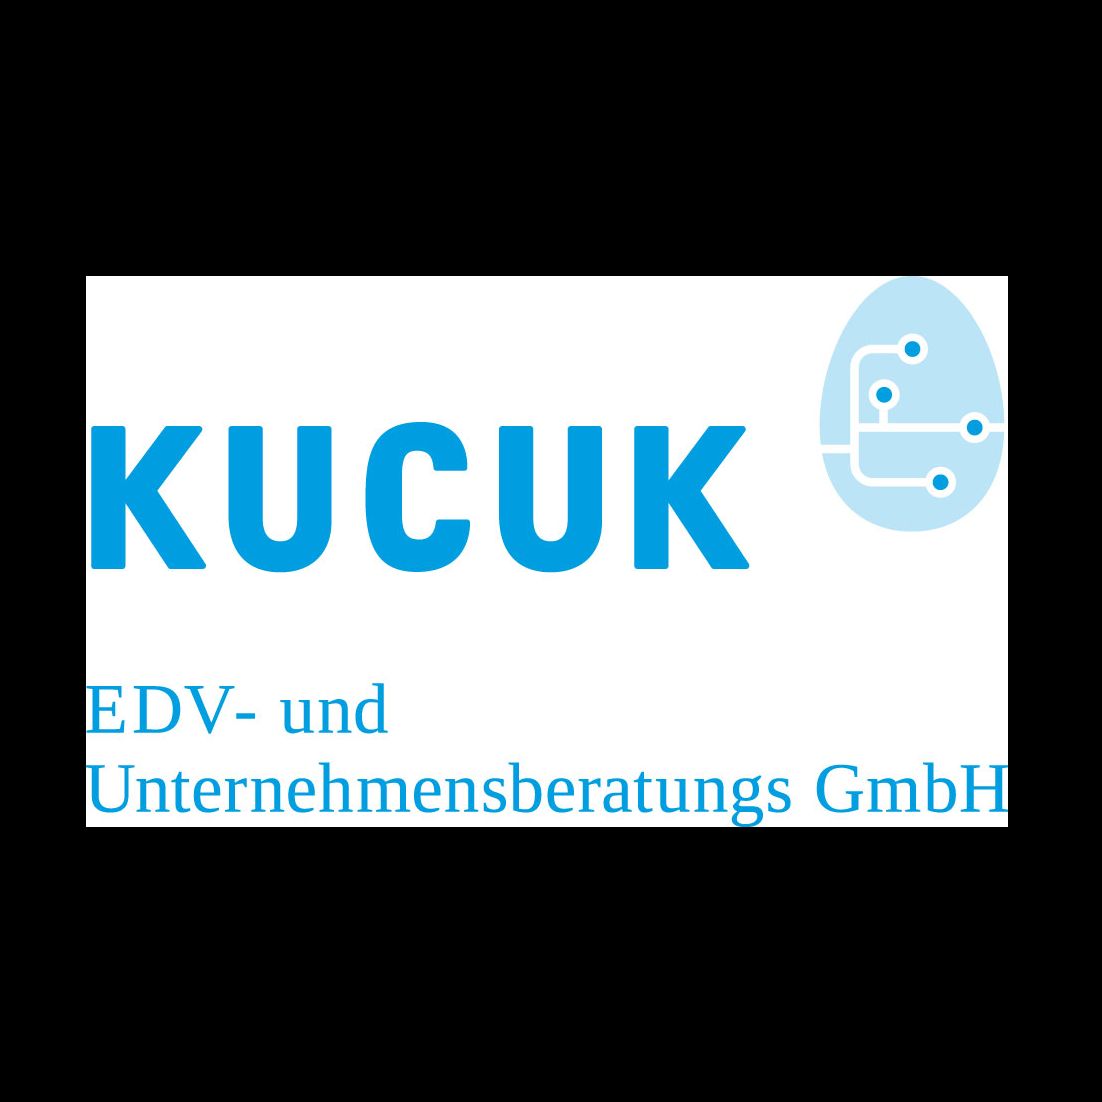 KUCUK EDV- und Unternehmensberatungs GmbH